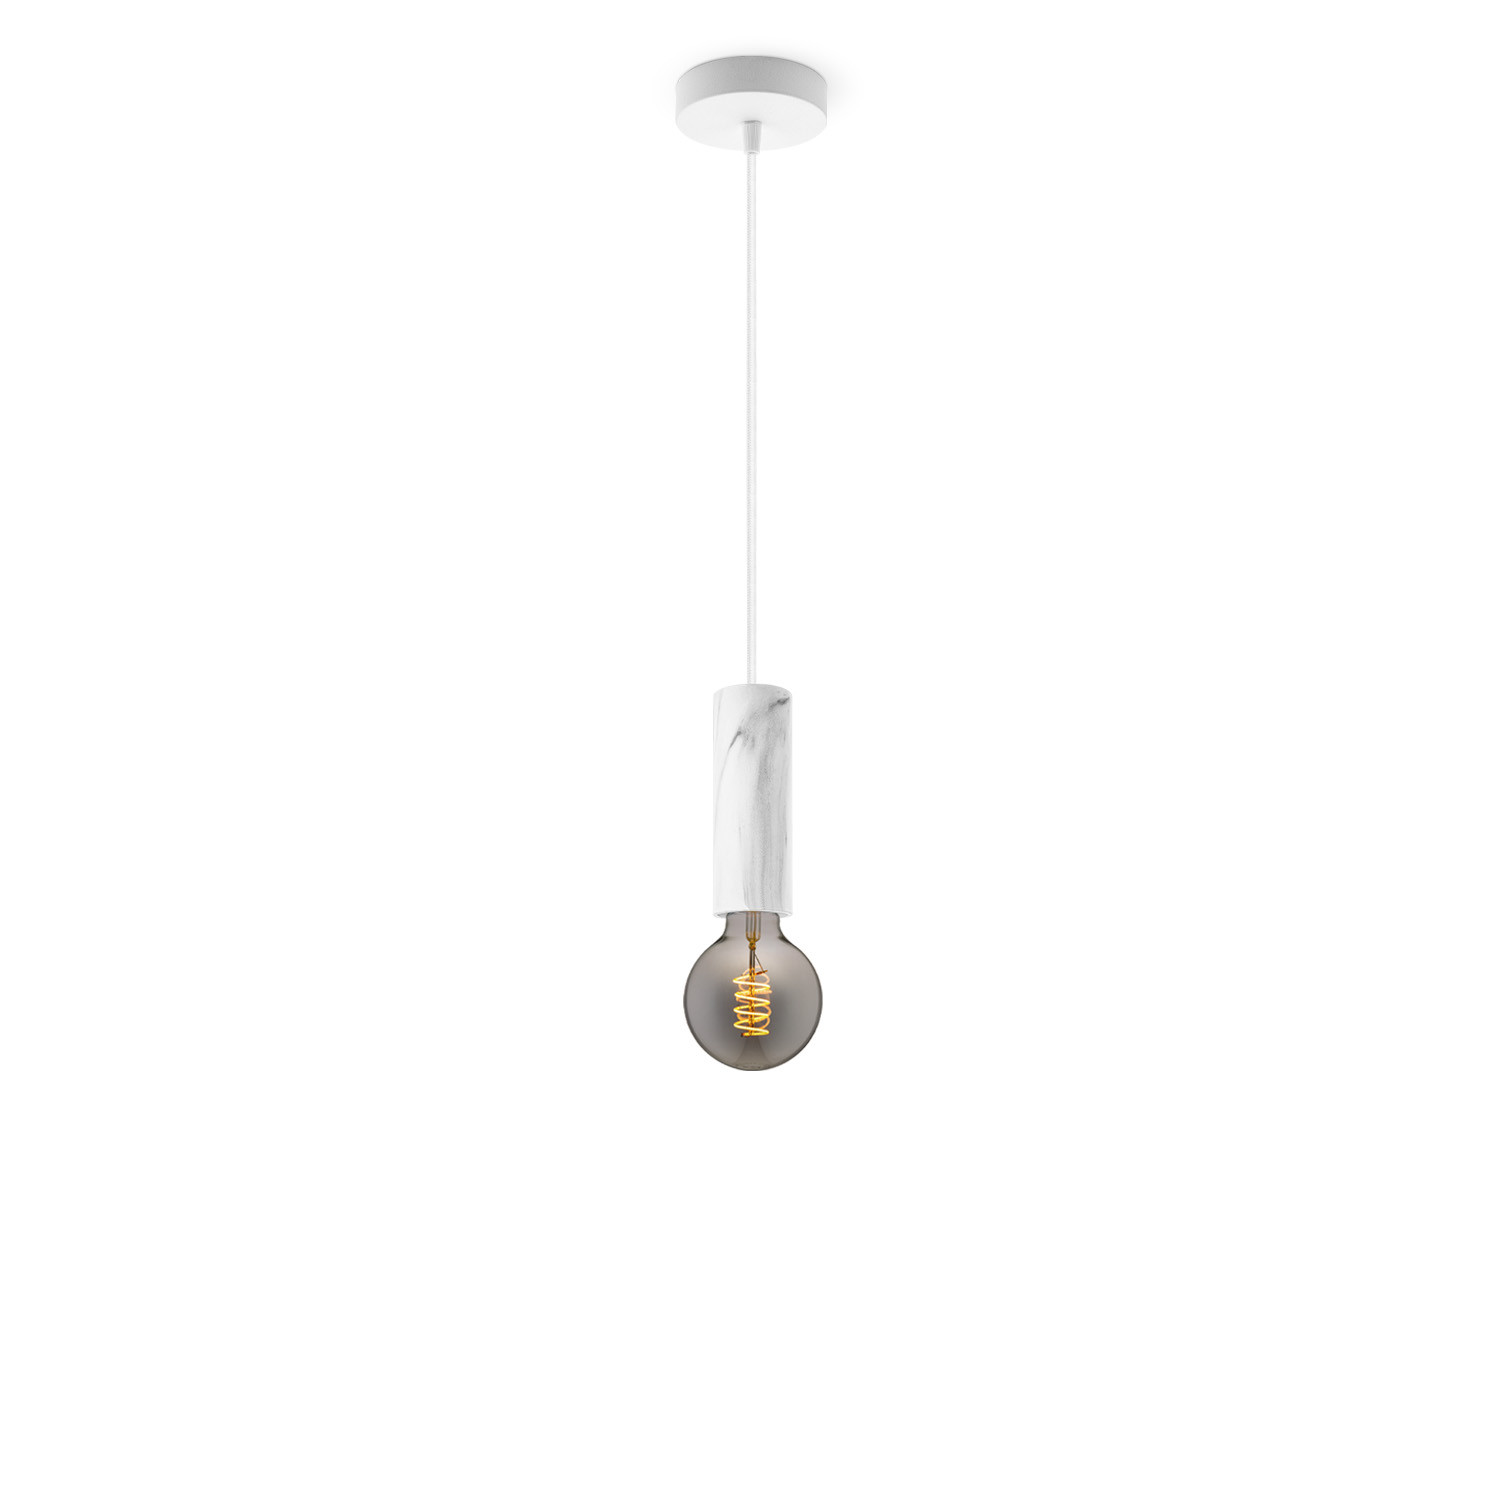 Light depot - hanglamp Saga marmer Spiral g95 - smoke - Outlet